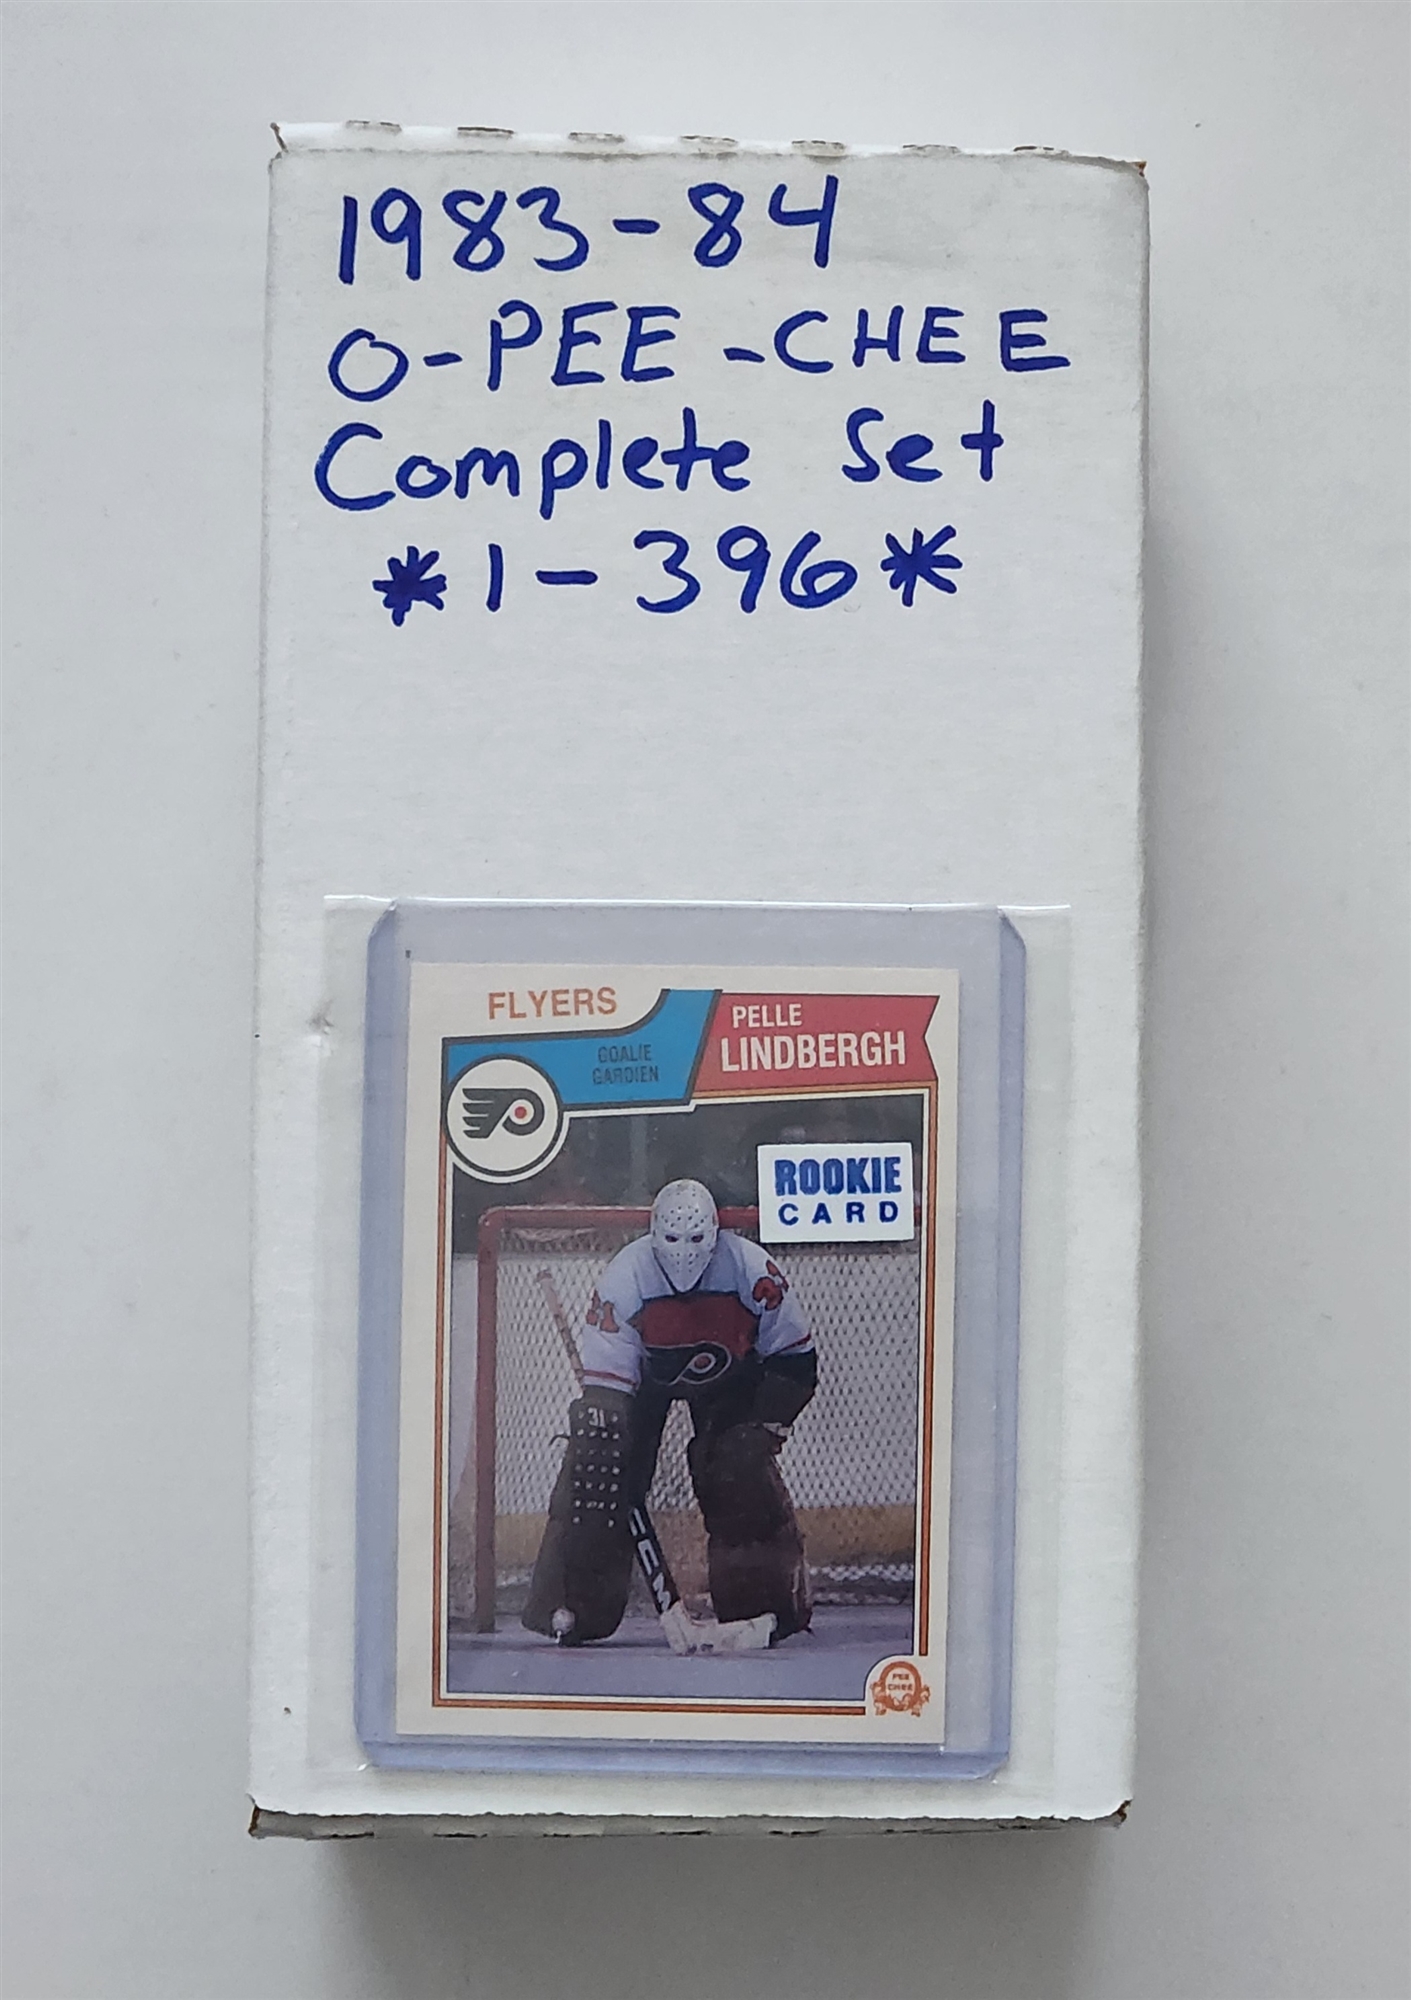 1983-84 O-Pee-Chee Hockey Complete Set With Housley & Stevens Rookies